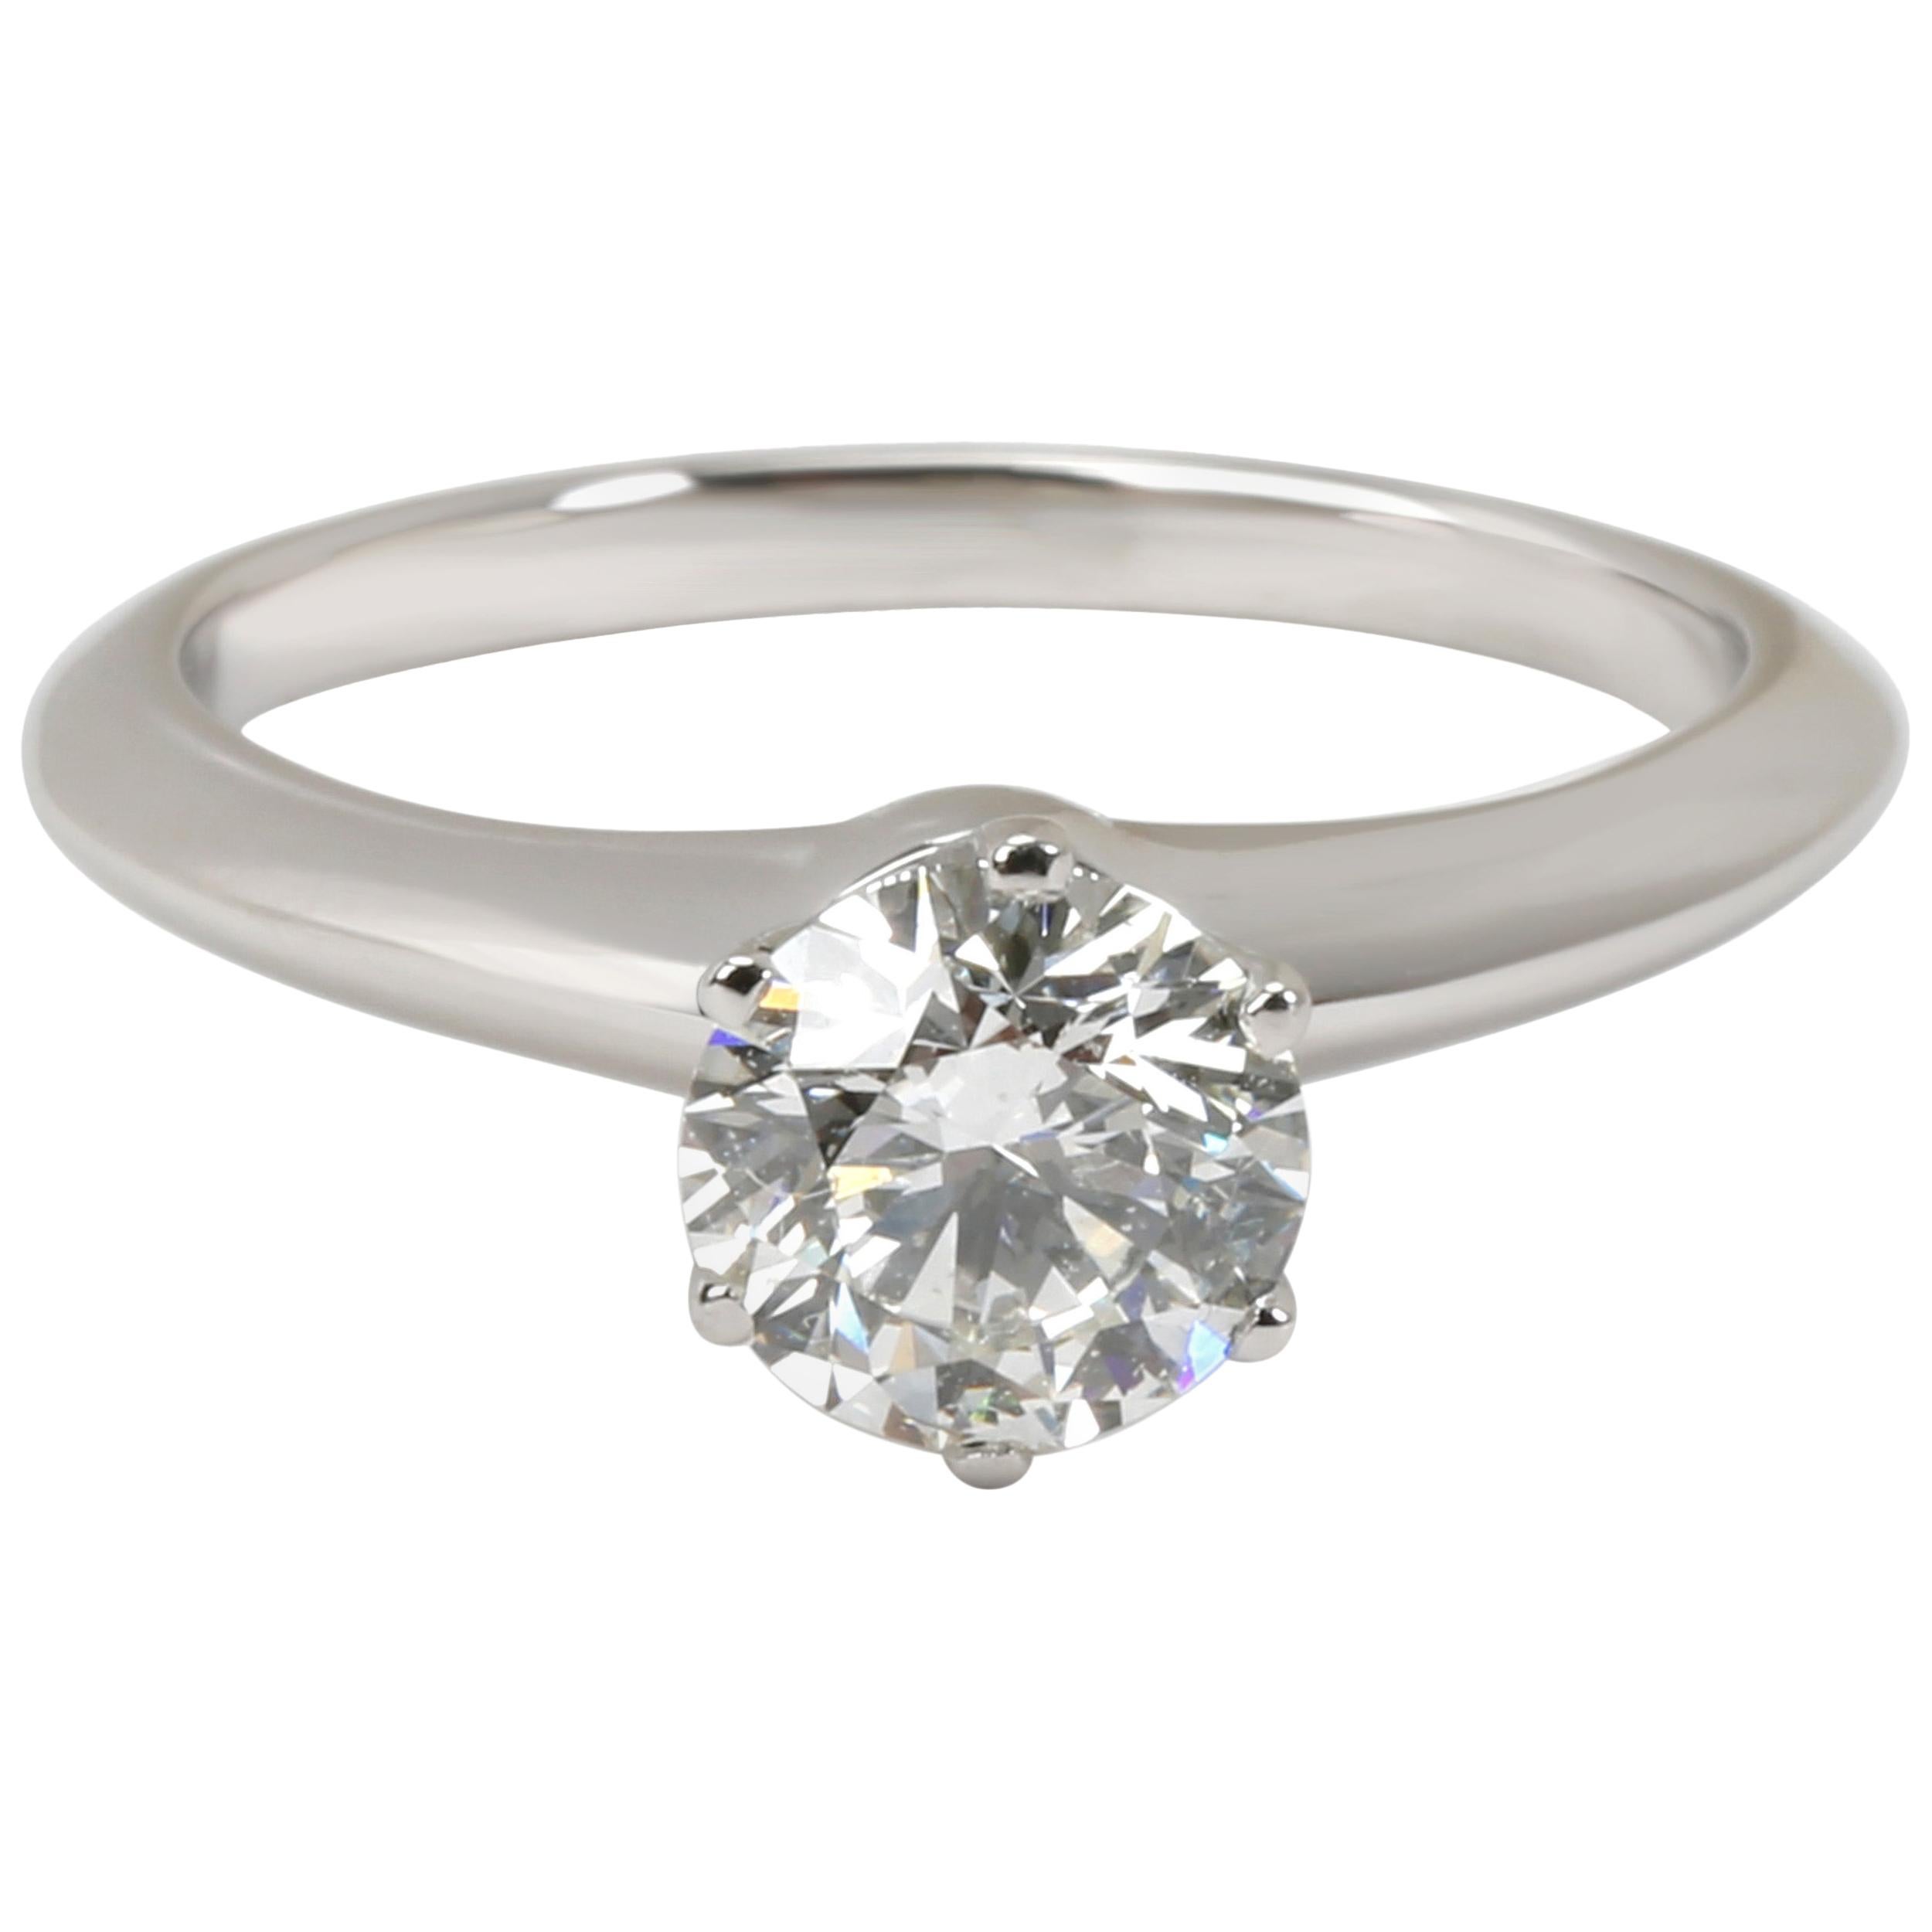 Tiffany & Co. Diamond Engagement Ring in Platinum H VS2 1.01 Carat